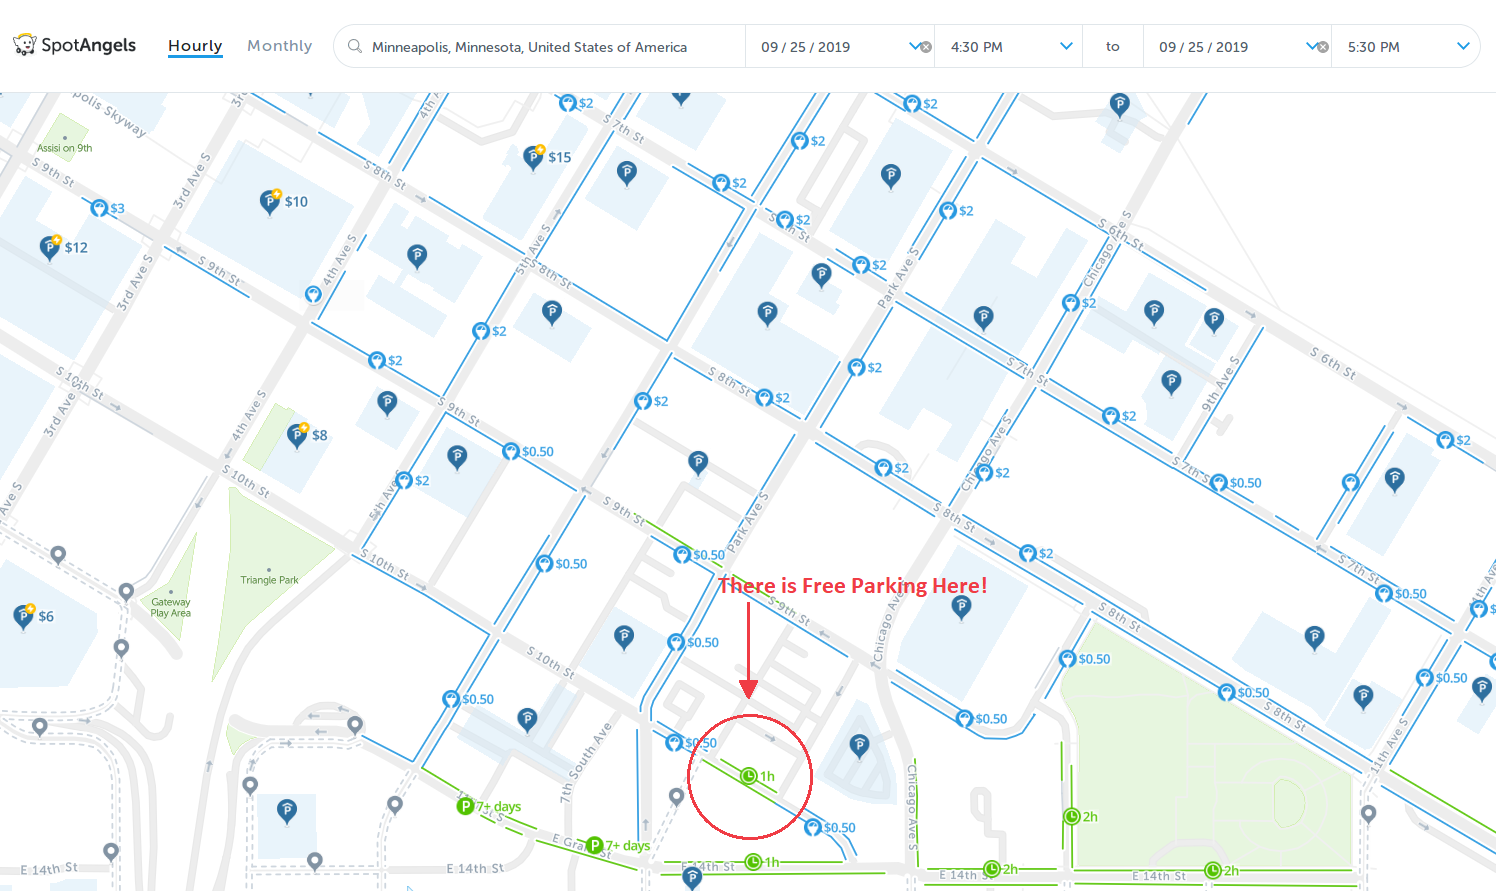 map of free parking in Minneapolis - SpotAngels